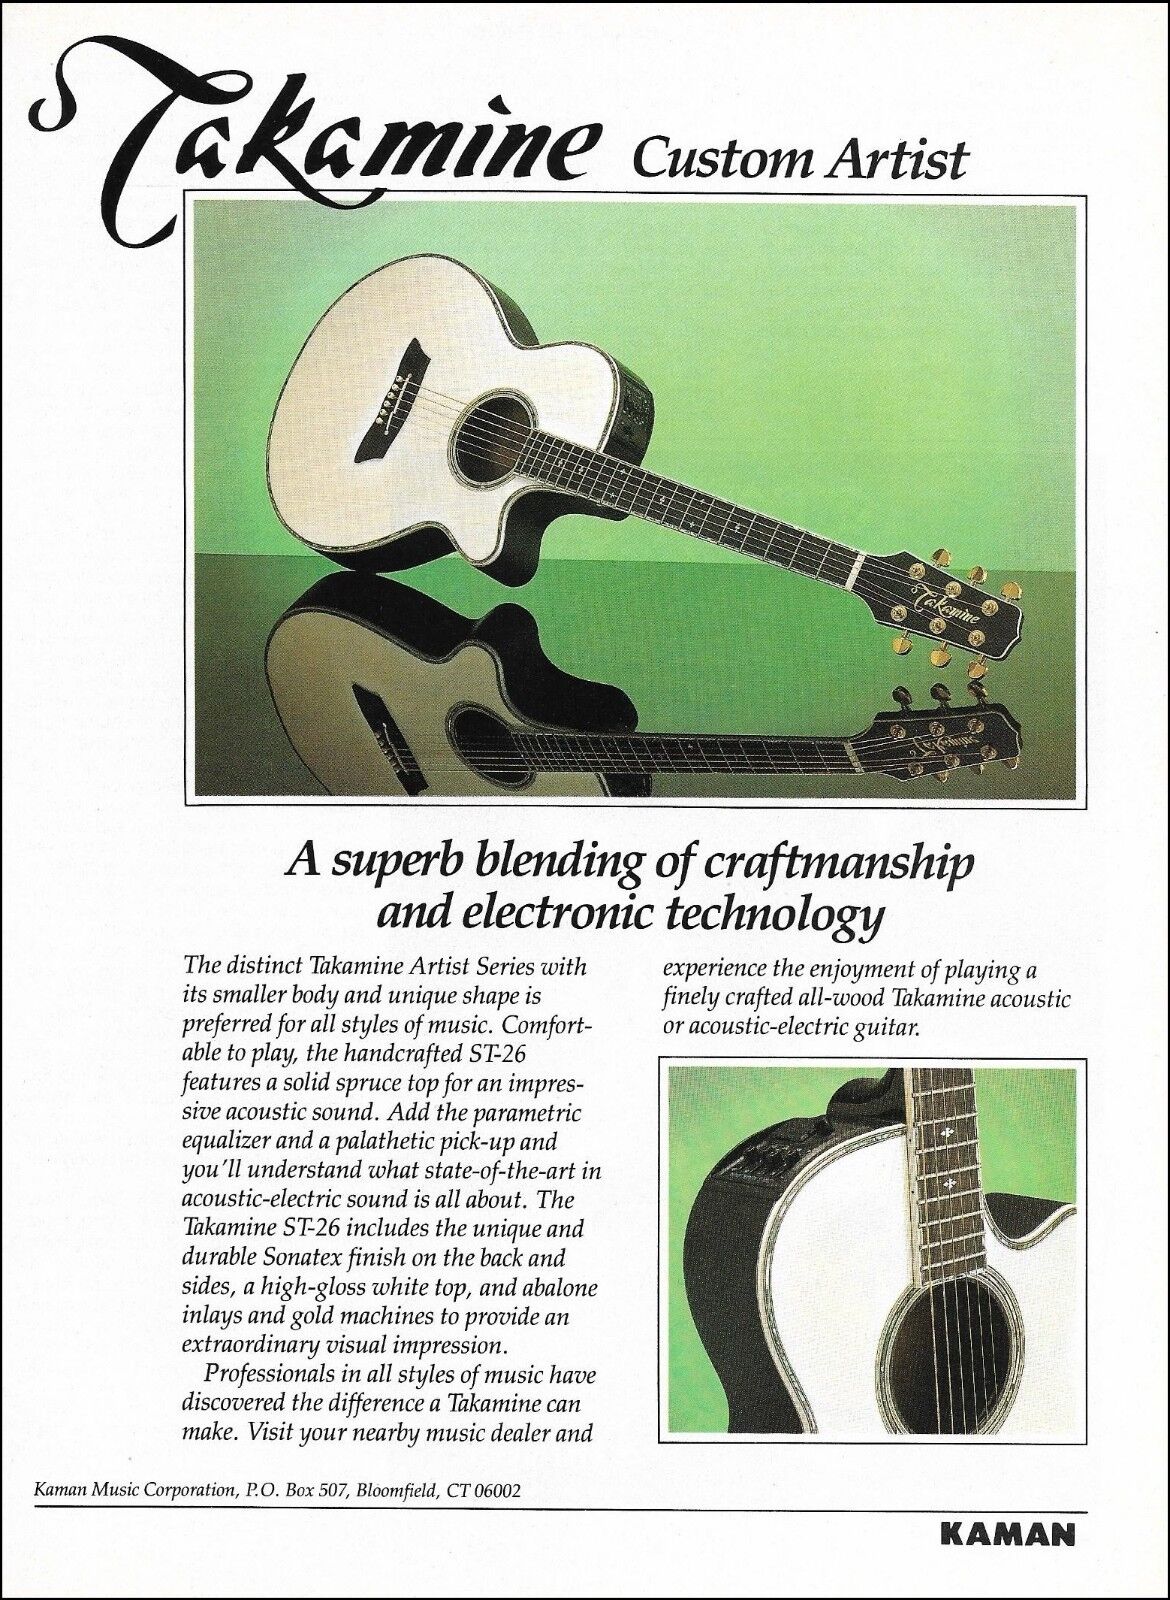 Takamine Custom Artist Series Acoustic Guitar 1990 advertisement 8 x 11 ad print